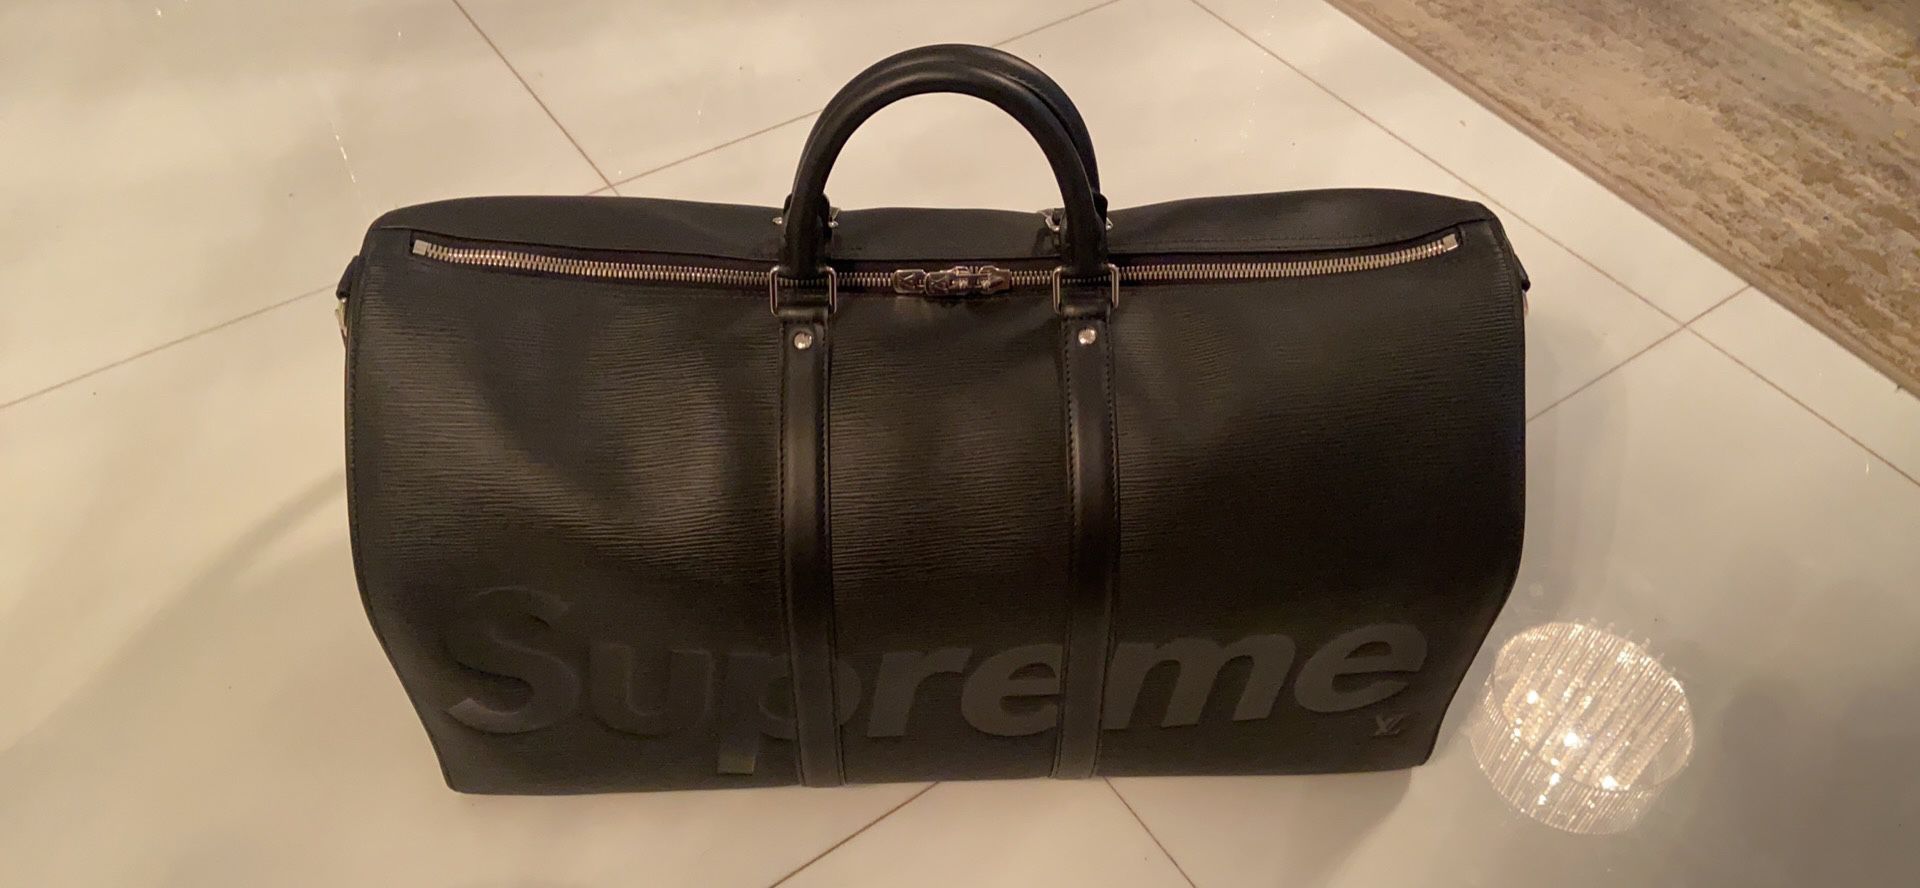 Supreme Louis Vuitton Buffle Bag 